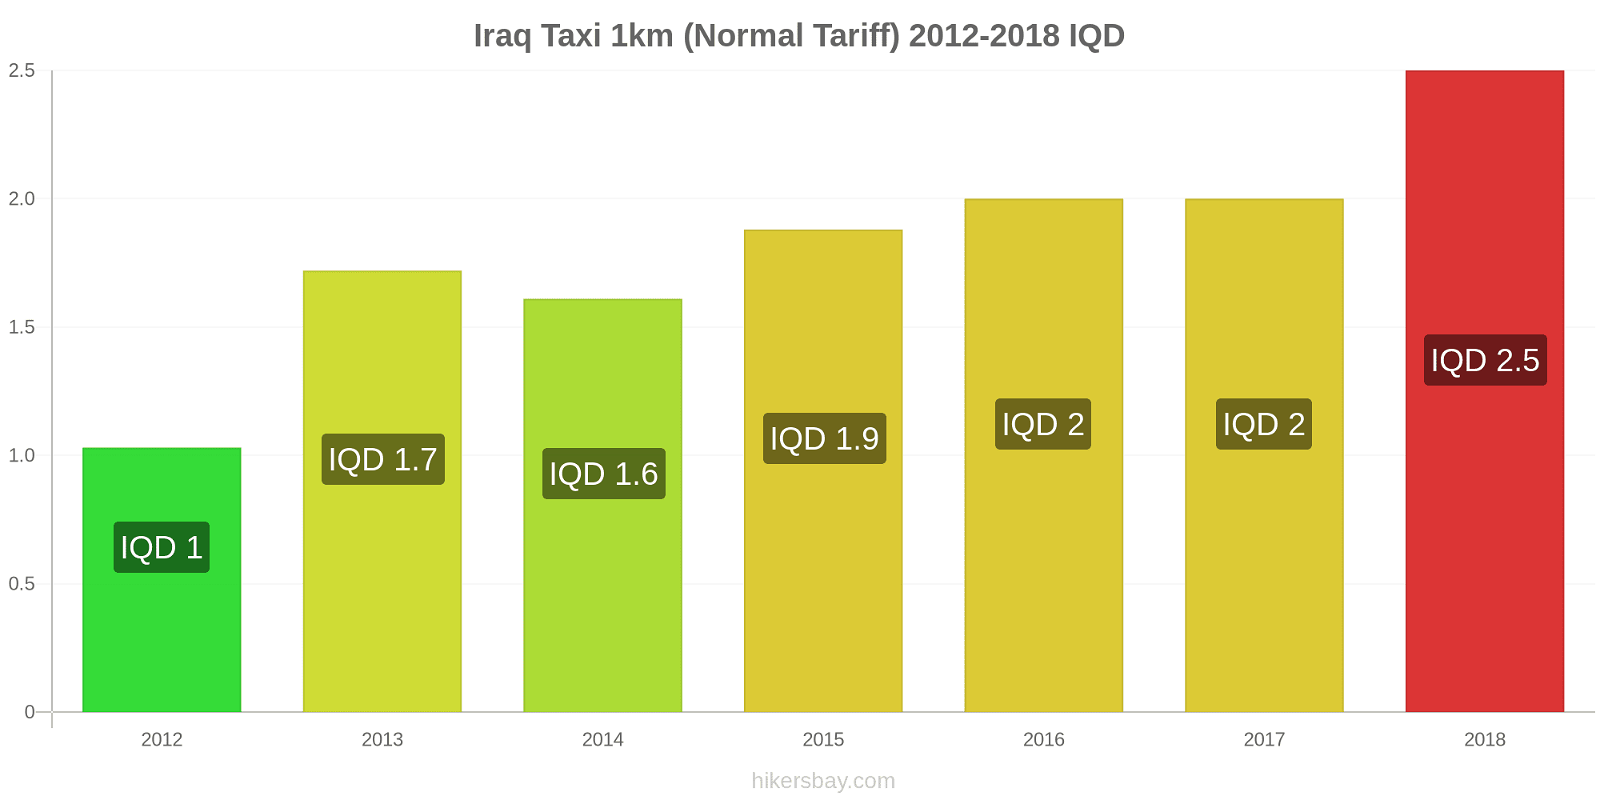 Iraq price changes Taxi 1km (Normal Tariff) hikersbay.com